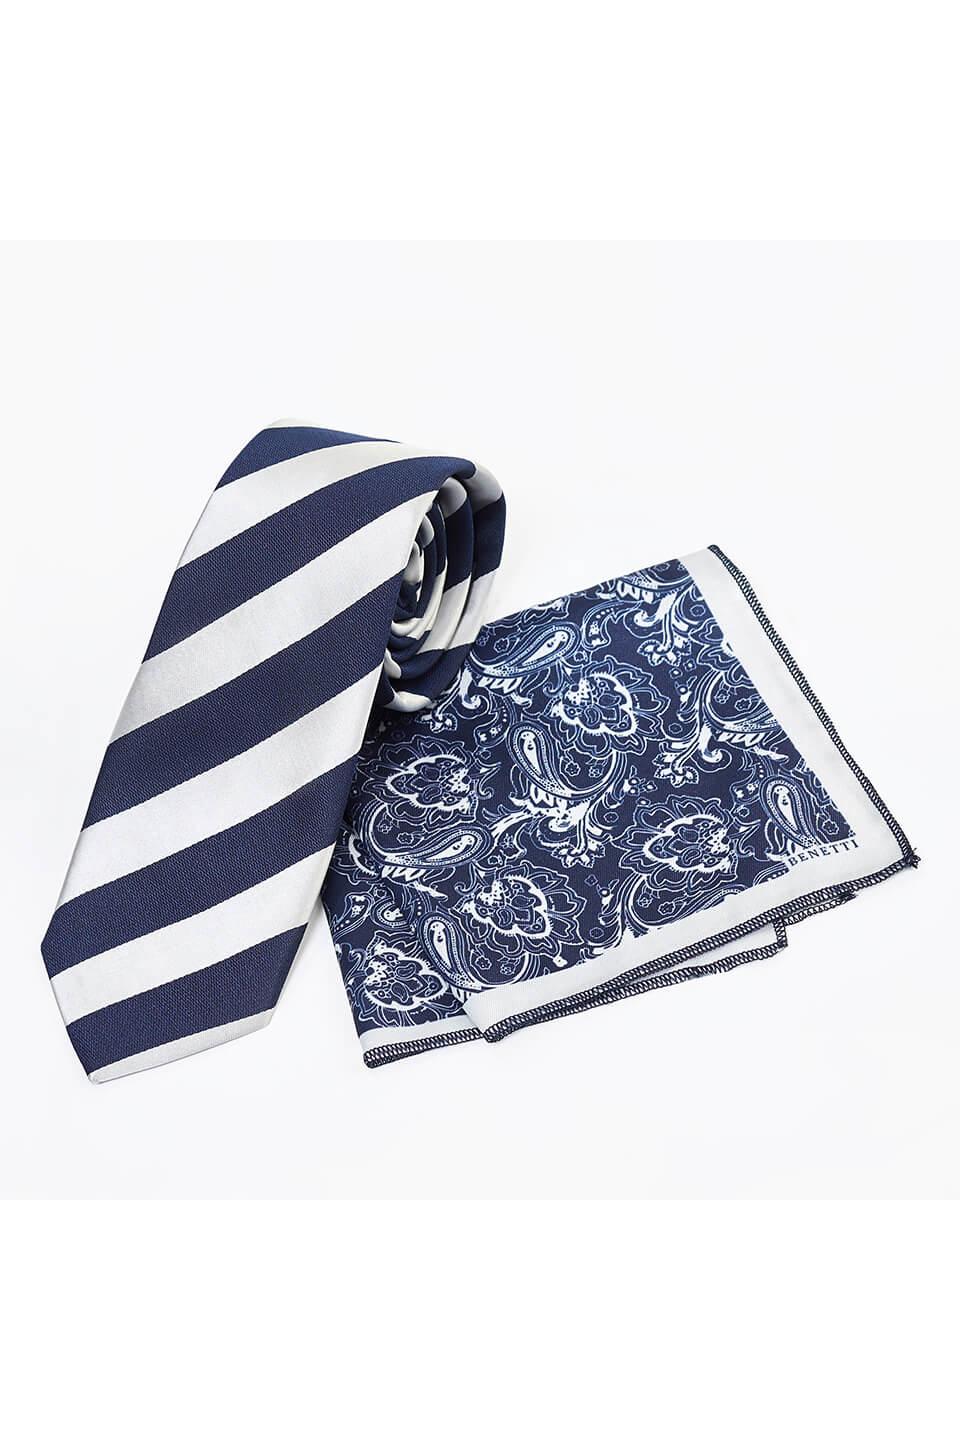 Stripe Silver/Navy Mens Tie  & Pocket Square